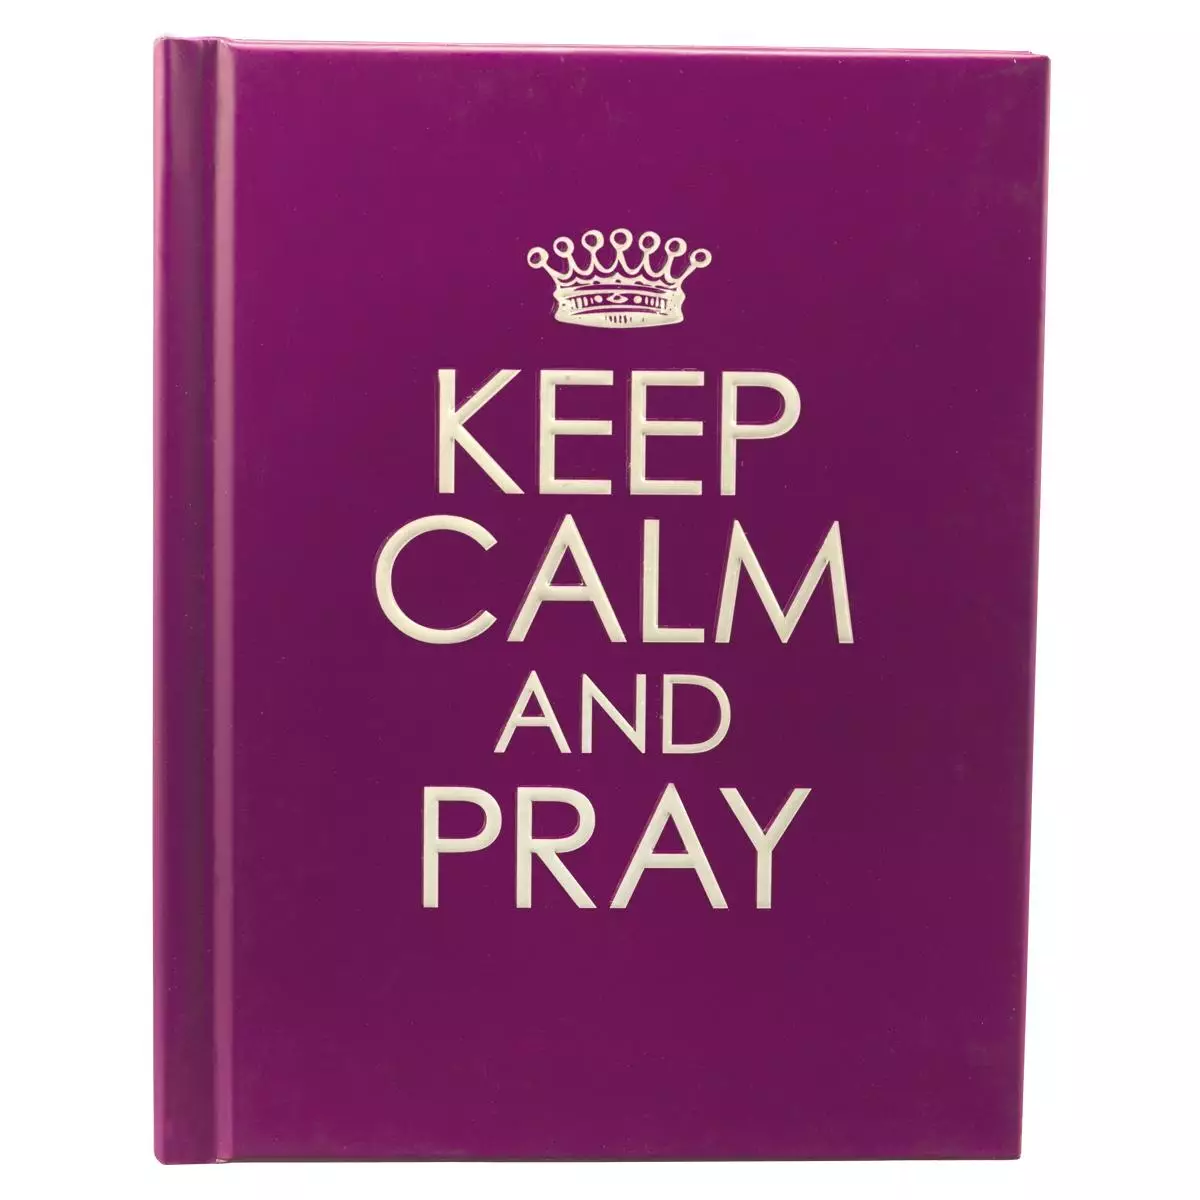 Keep Calm and Pray - Hardcover